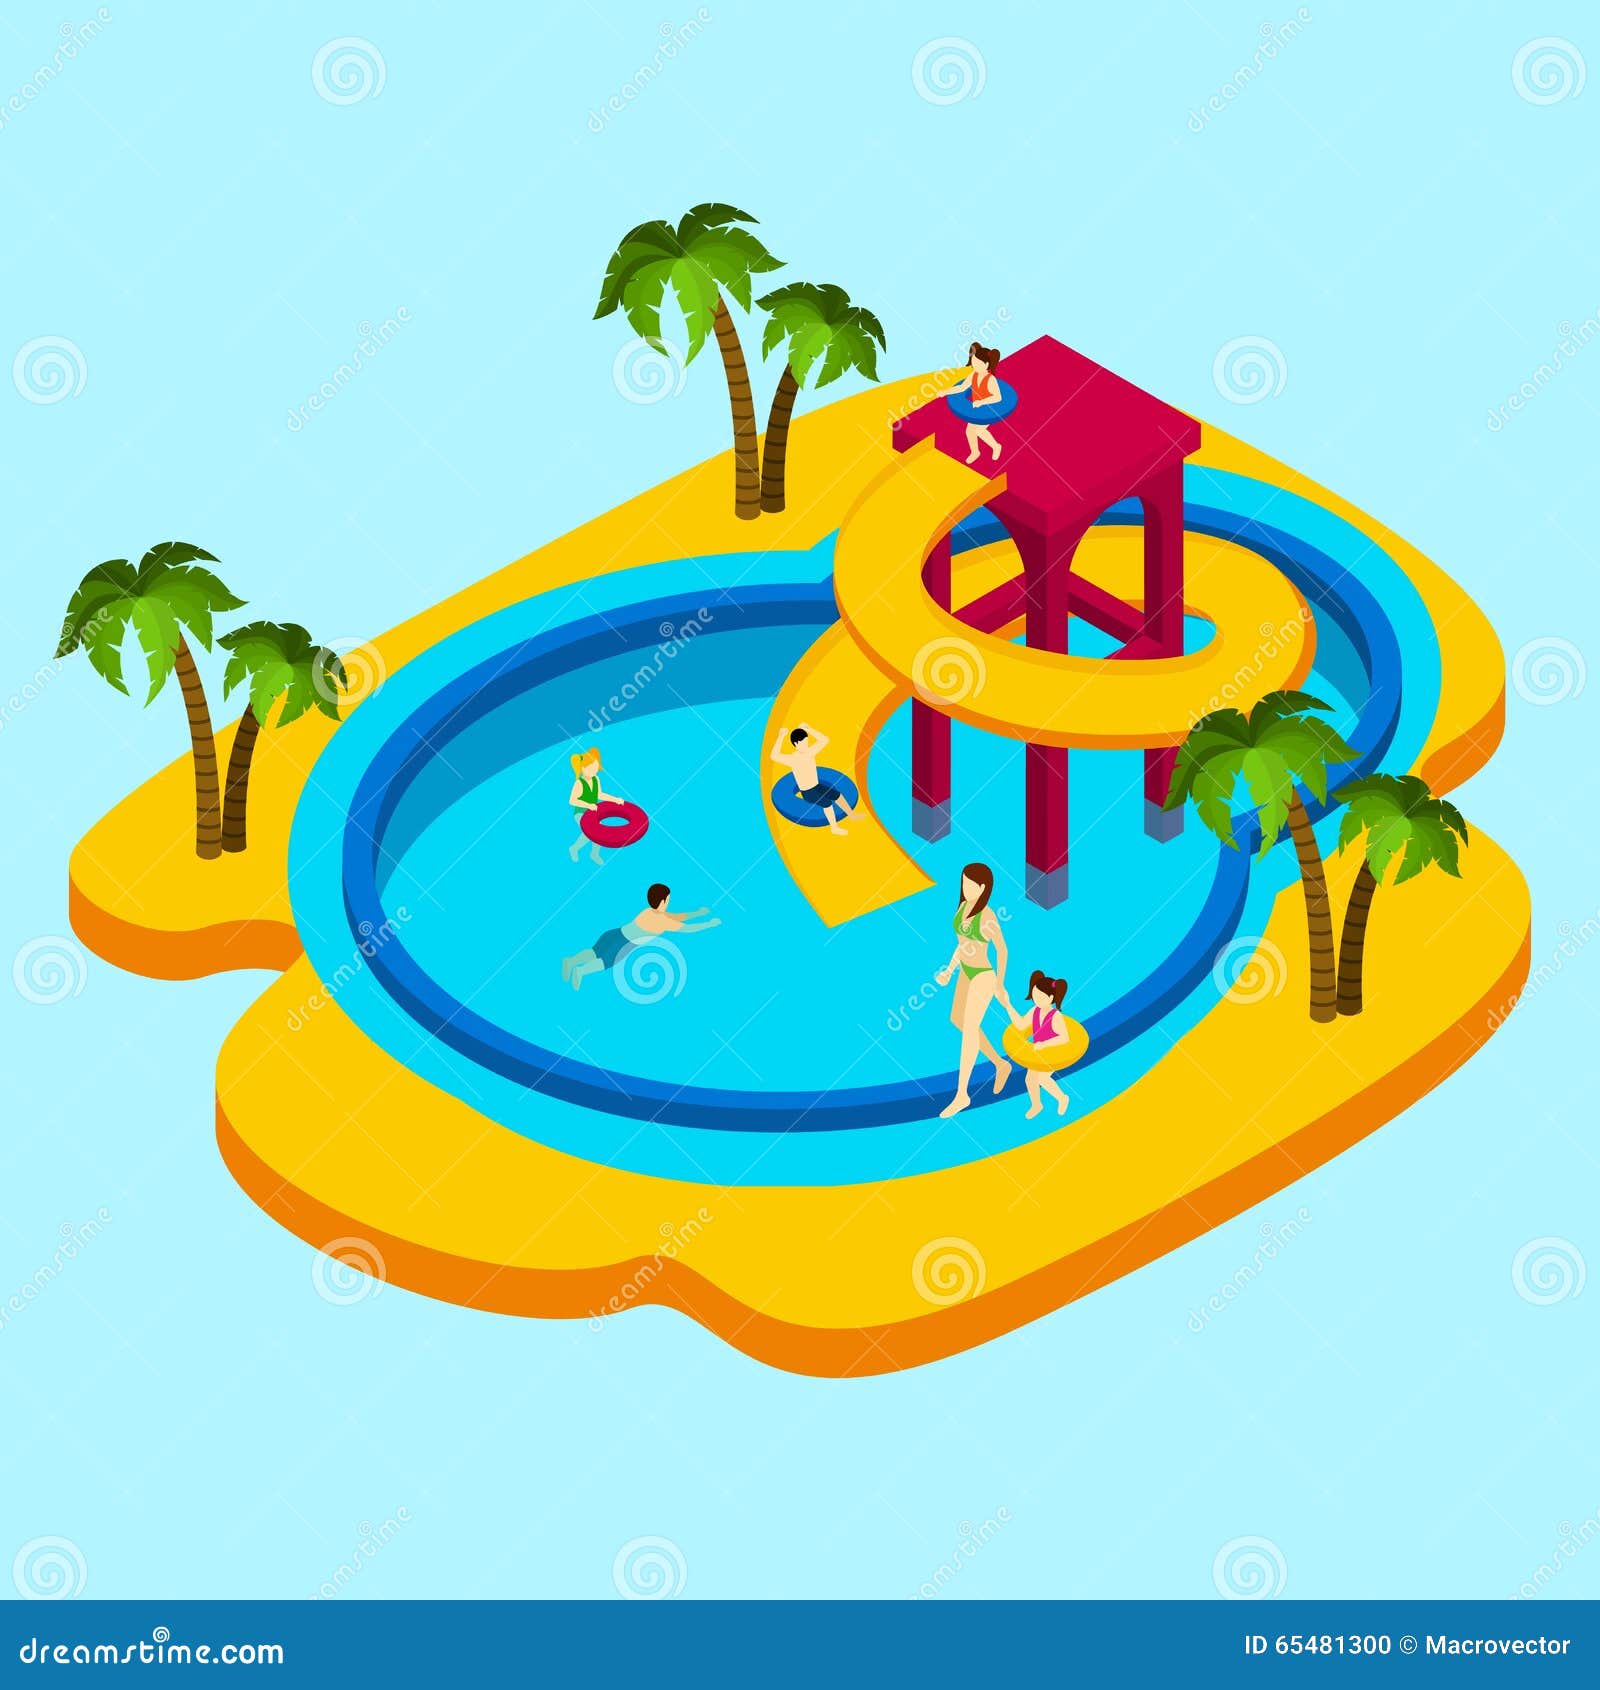 Water Park Illustration stock vector. Illustration of object - 65481300